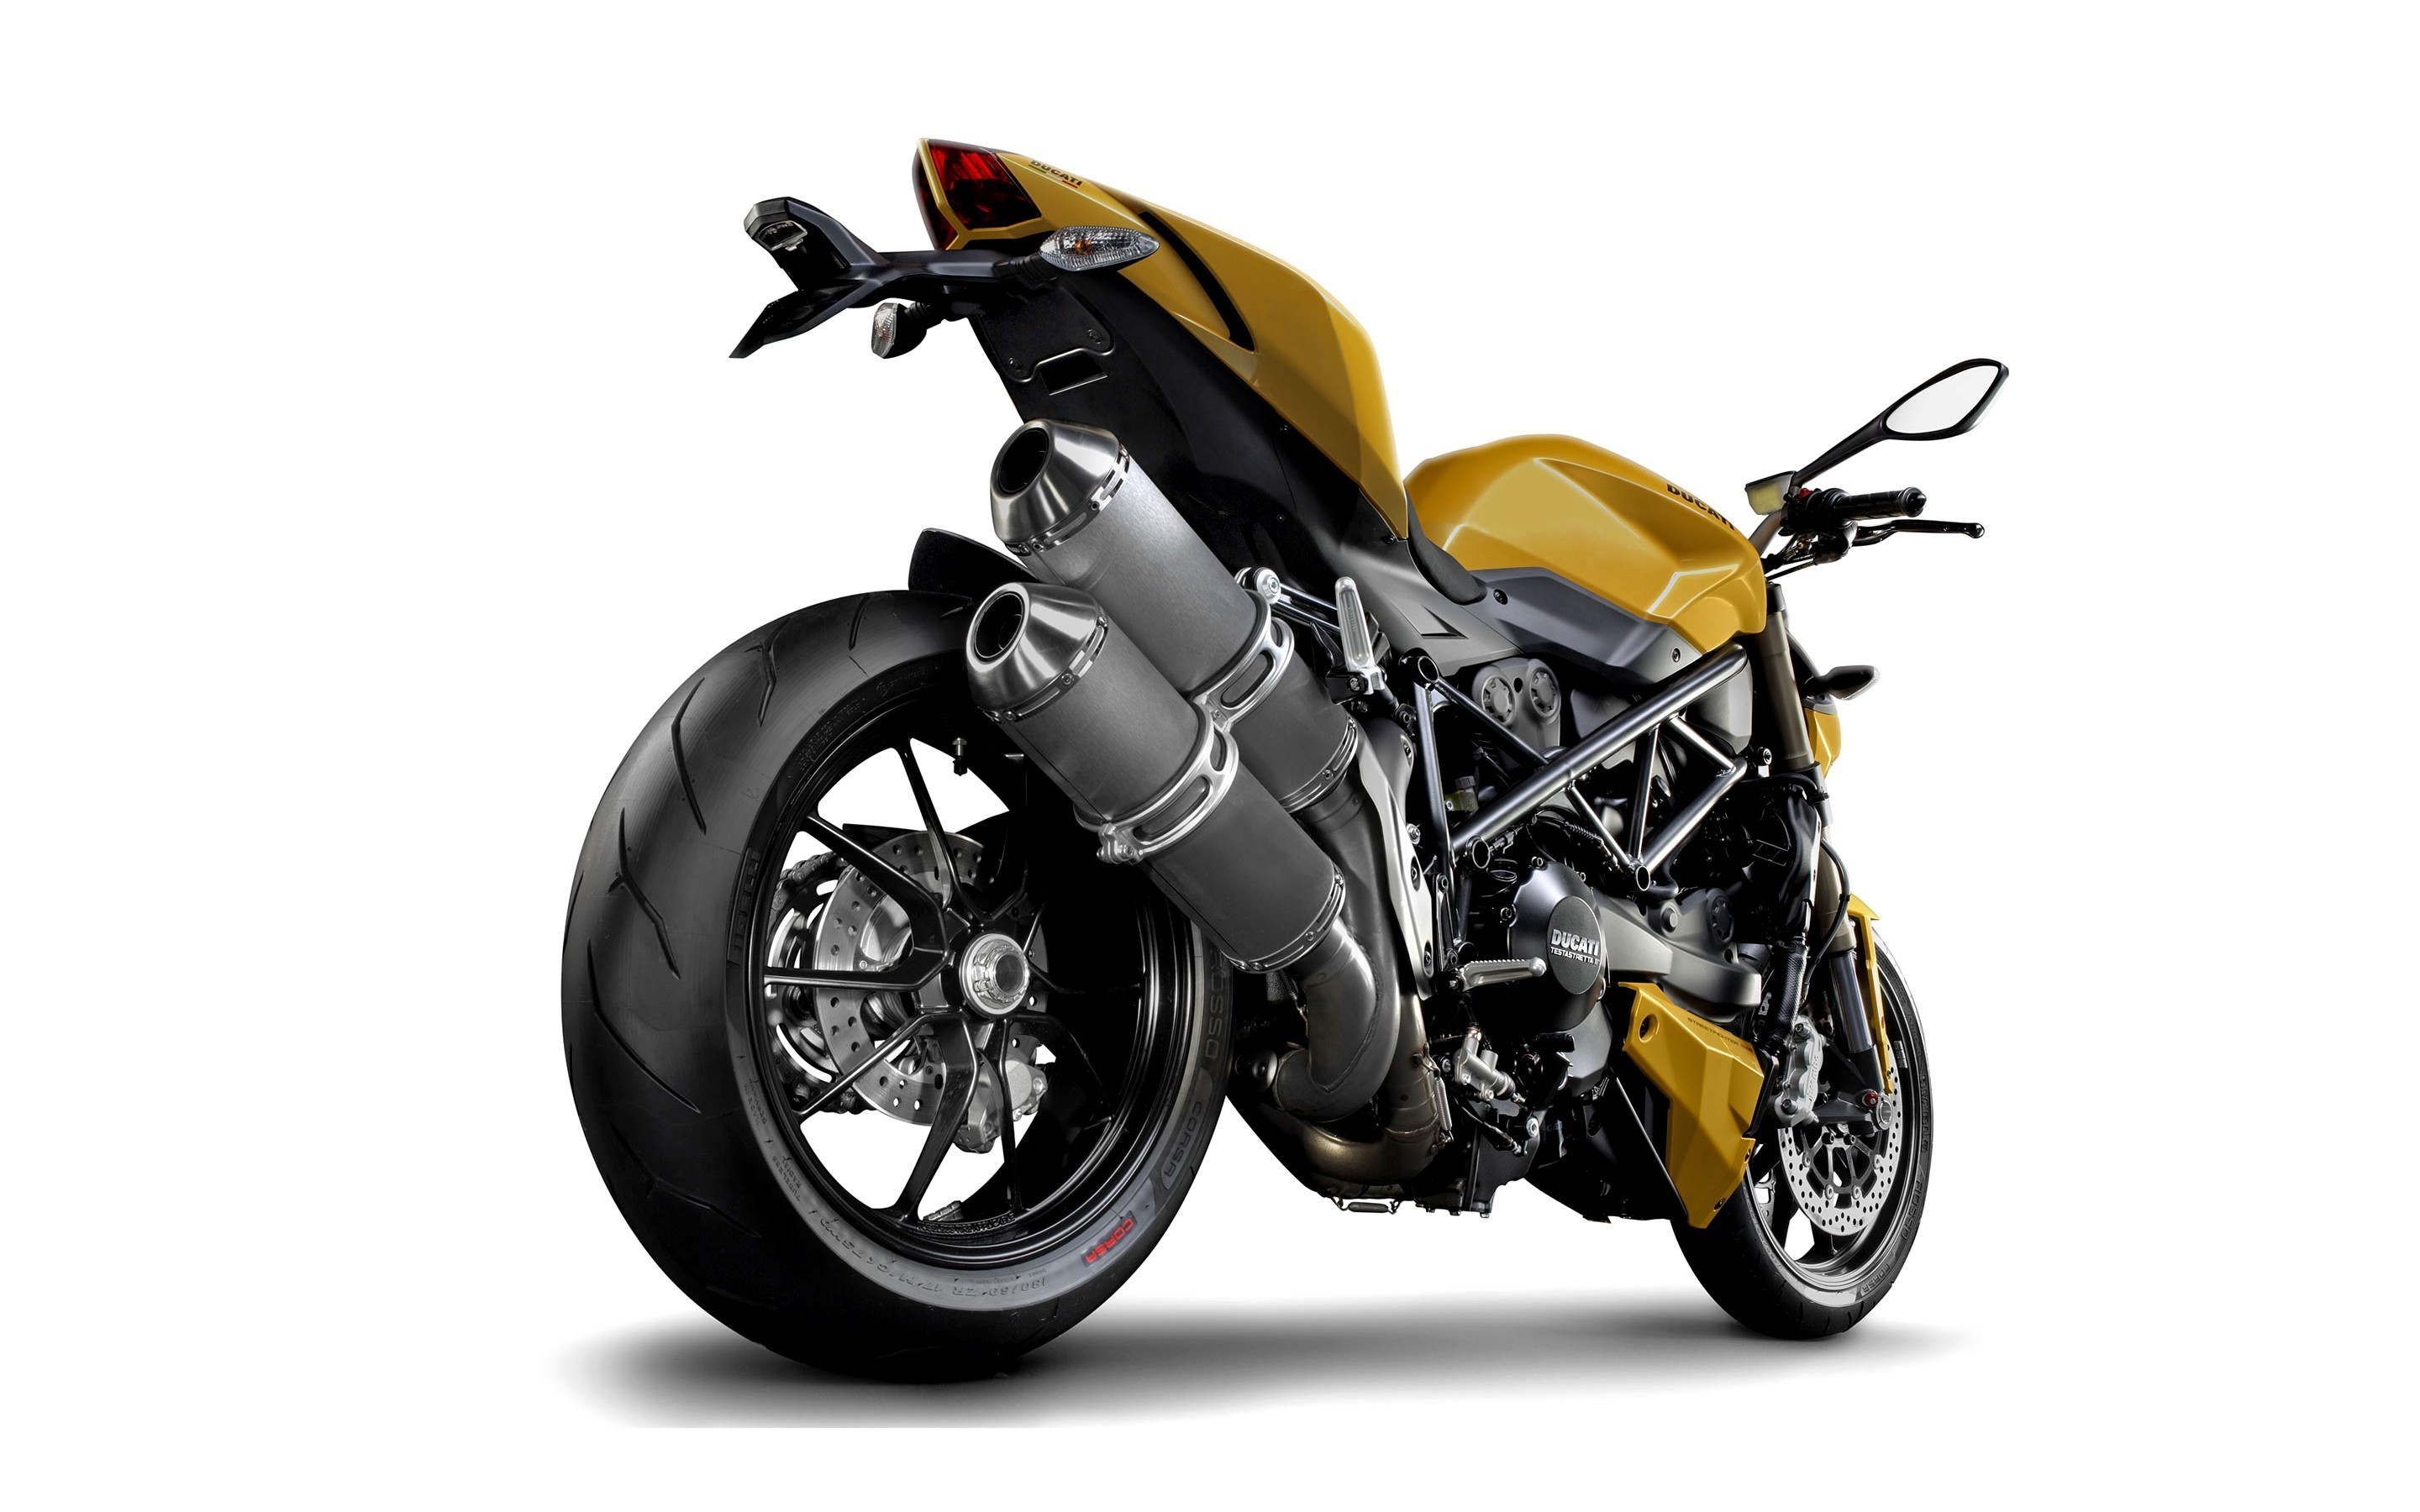  Ducati Streetfighter Rear for 2880 x 1800 Retina Display resolution